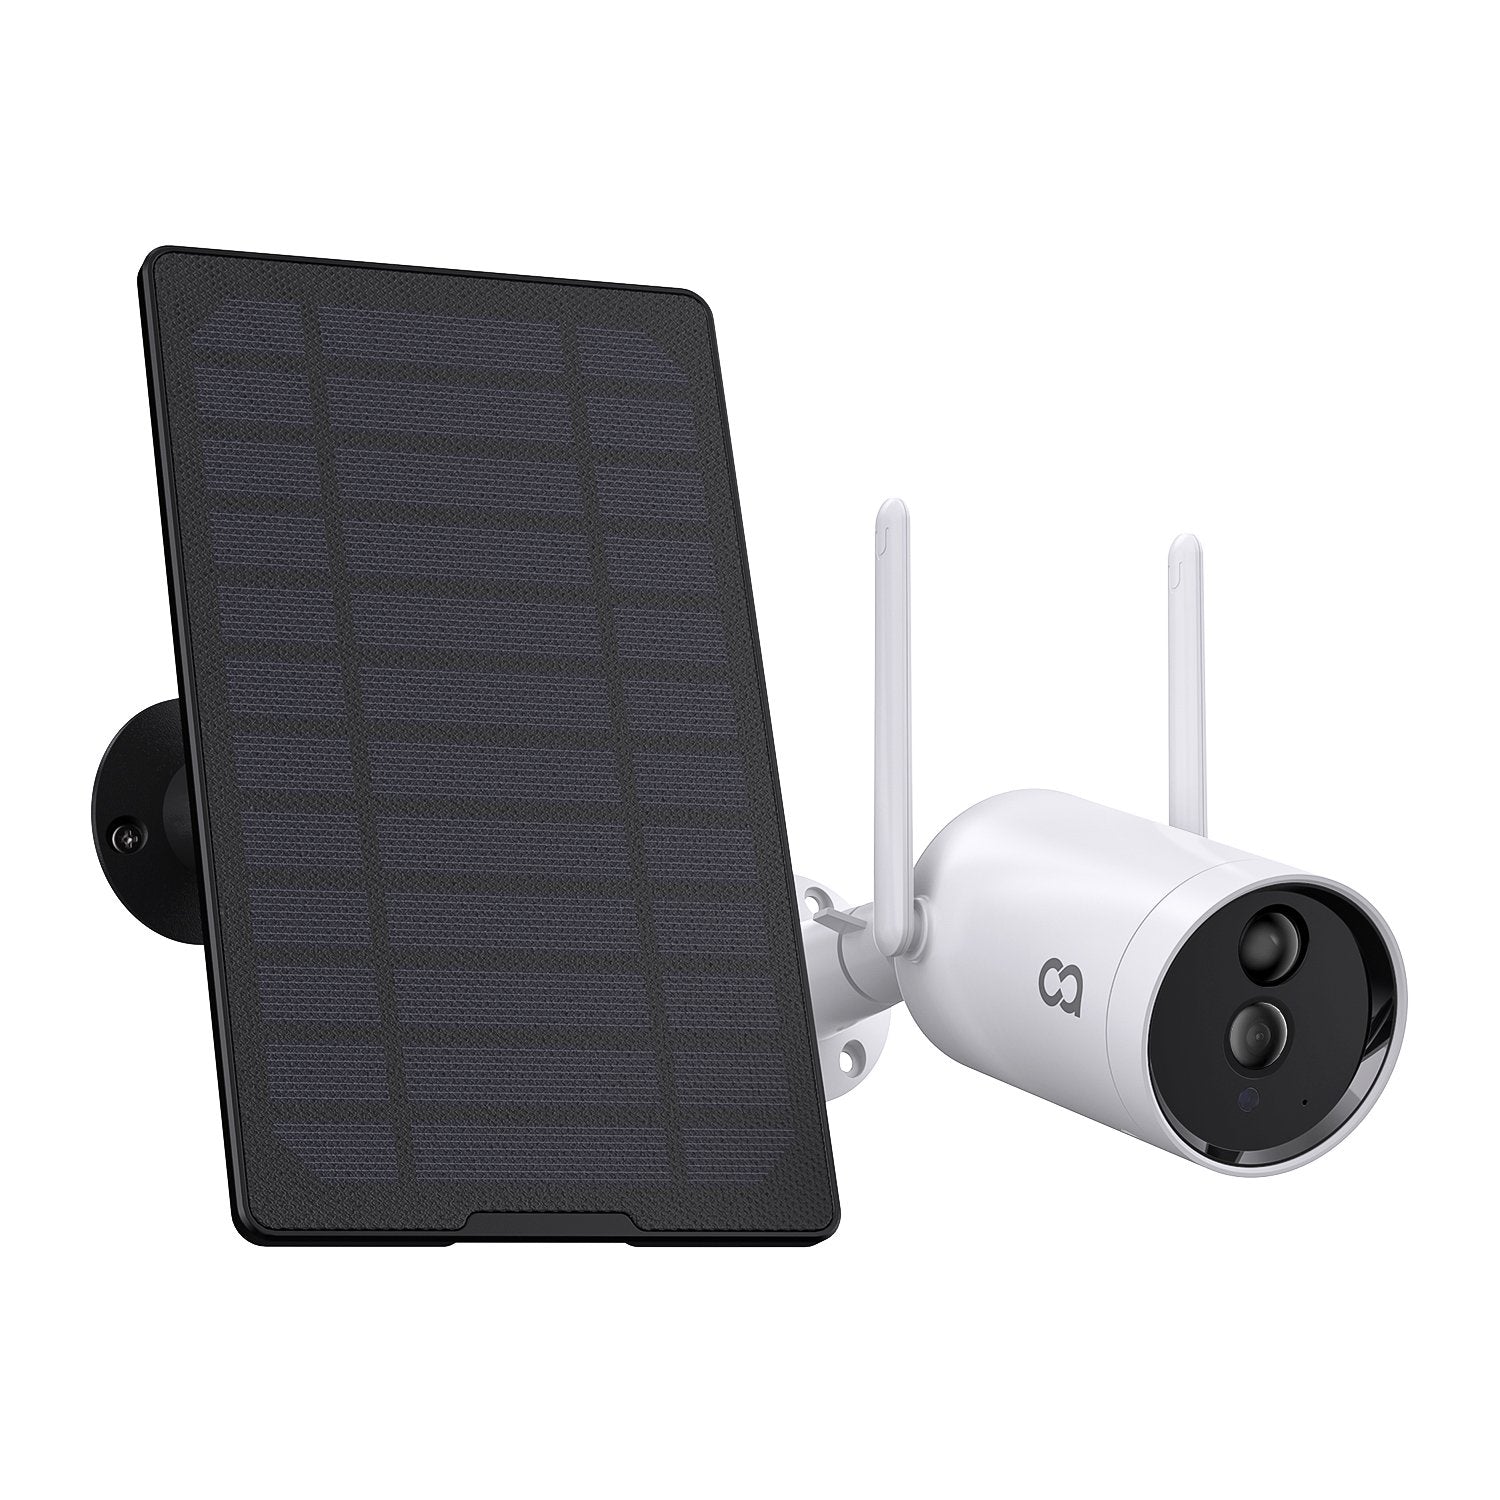 BOIFUN Outdoor Security Camera DD201 with Solar Panel